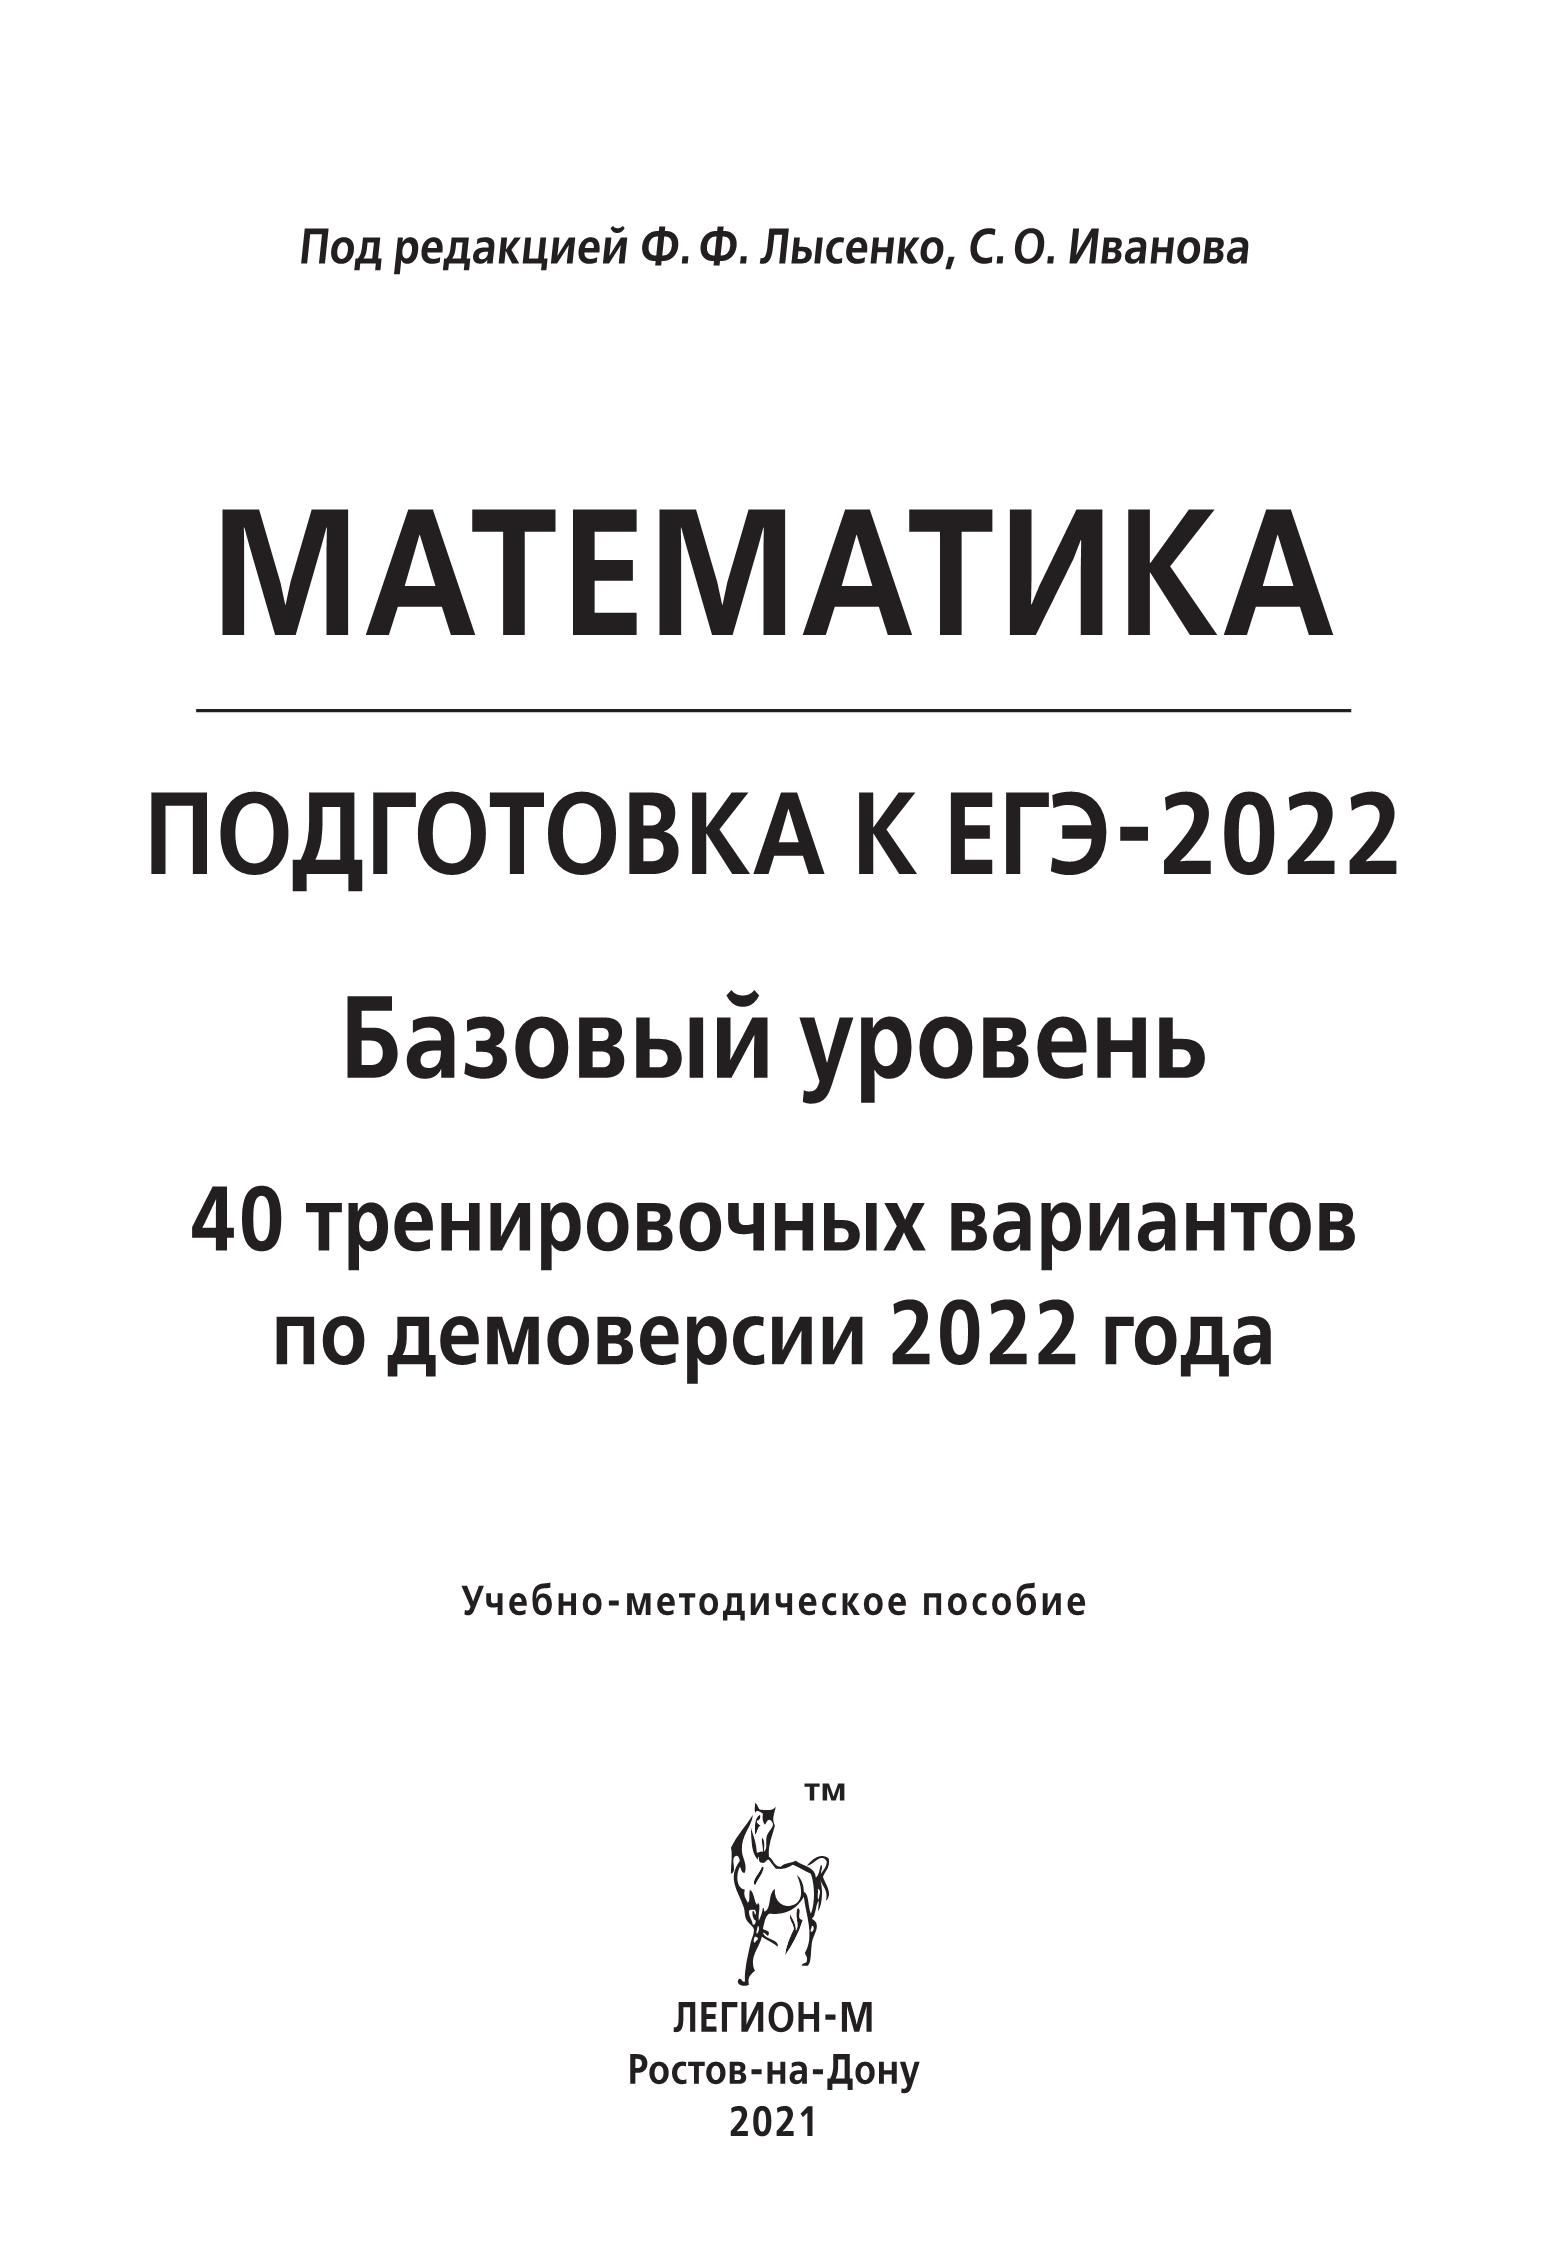 Математика. ЕГЭ-2022. Тематический тренинг